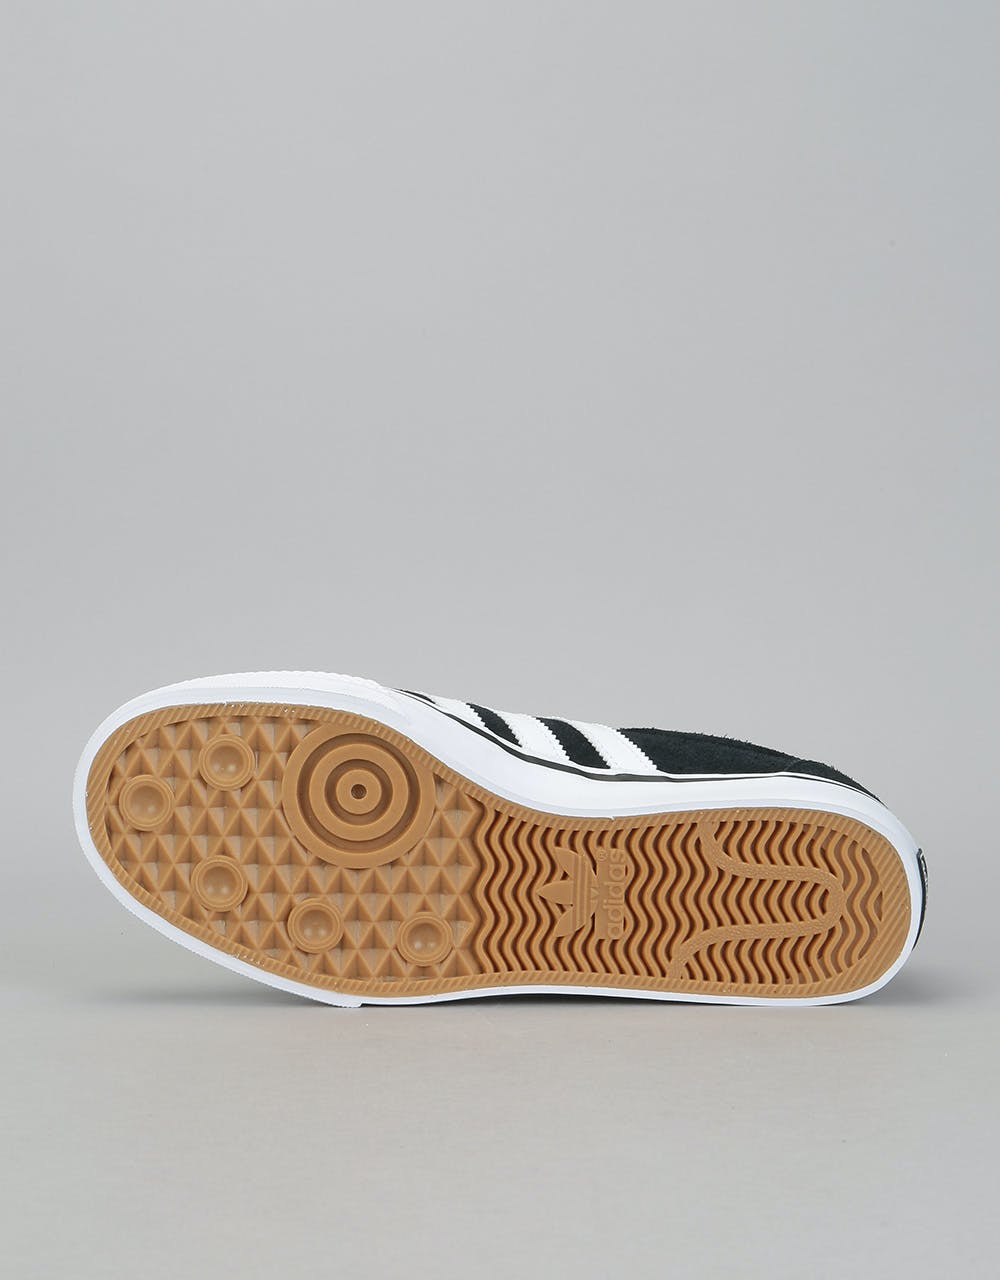 Adidas Adi-Ease Skate Shoes - Core Black/White/Core Black